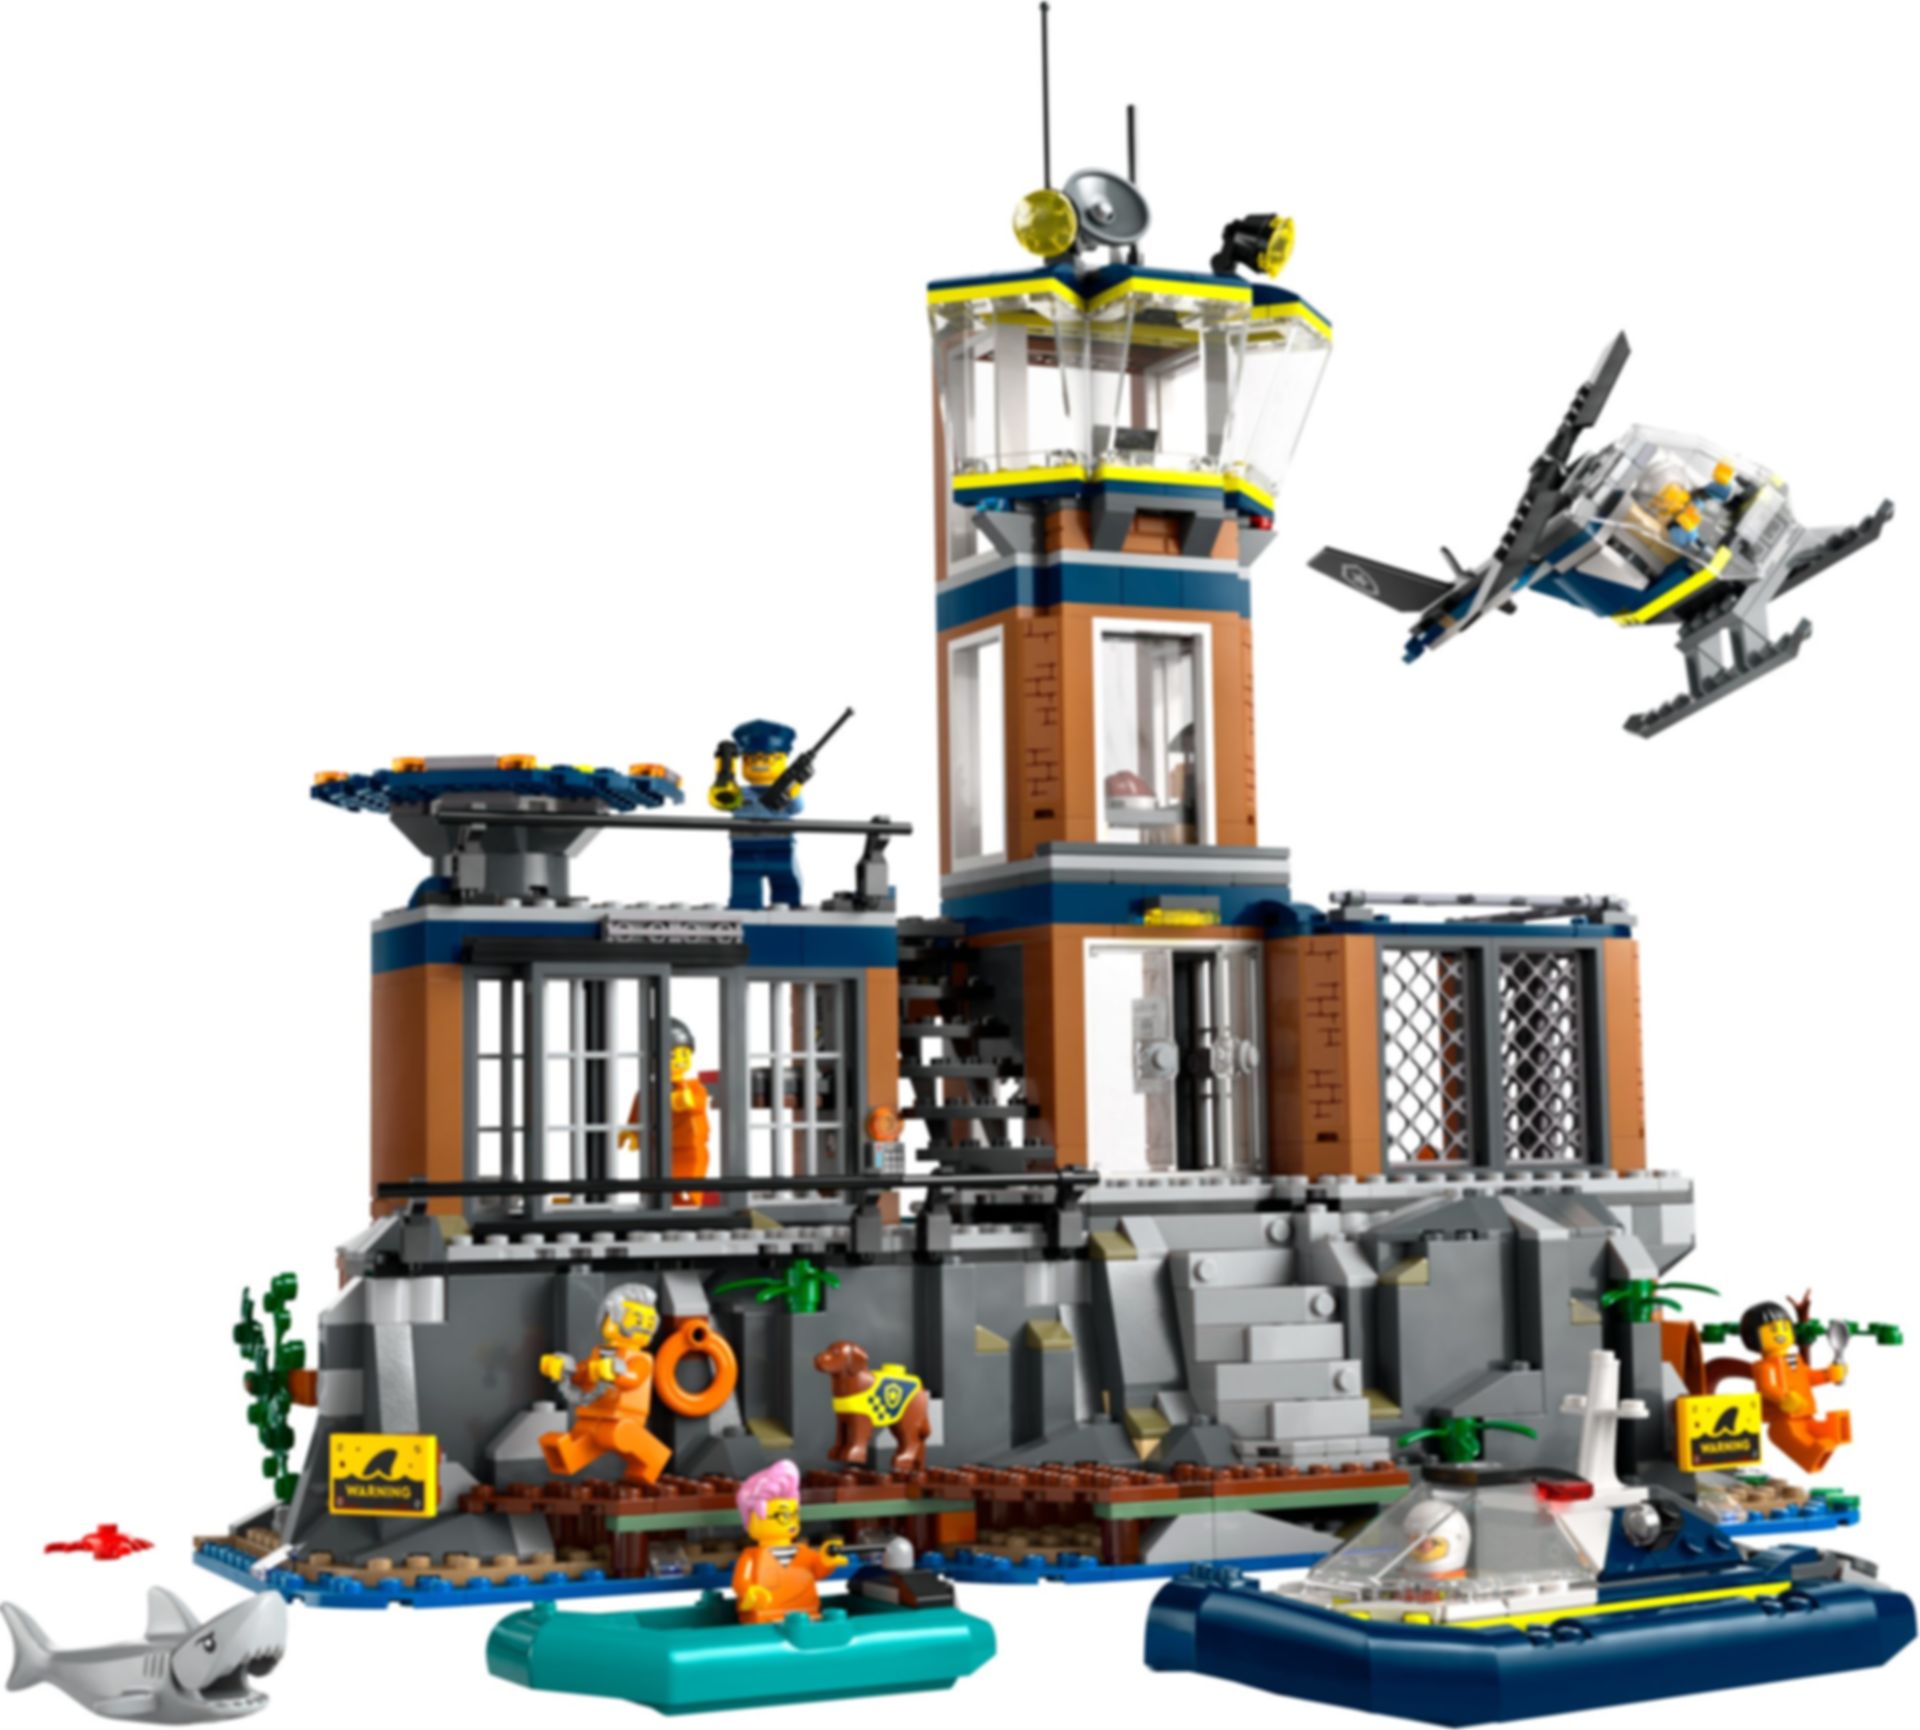 LEGO® City Police Prison Island components